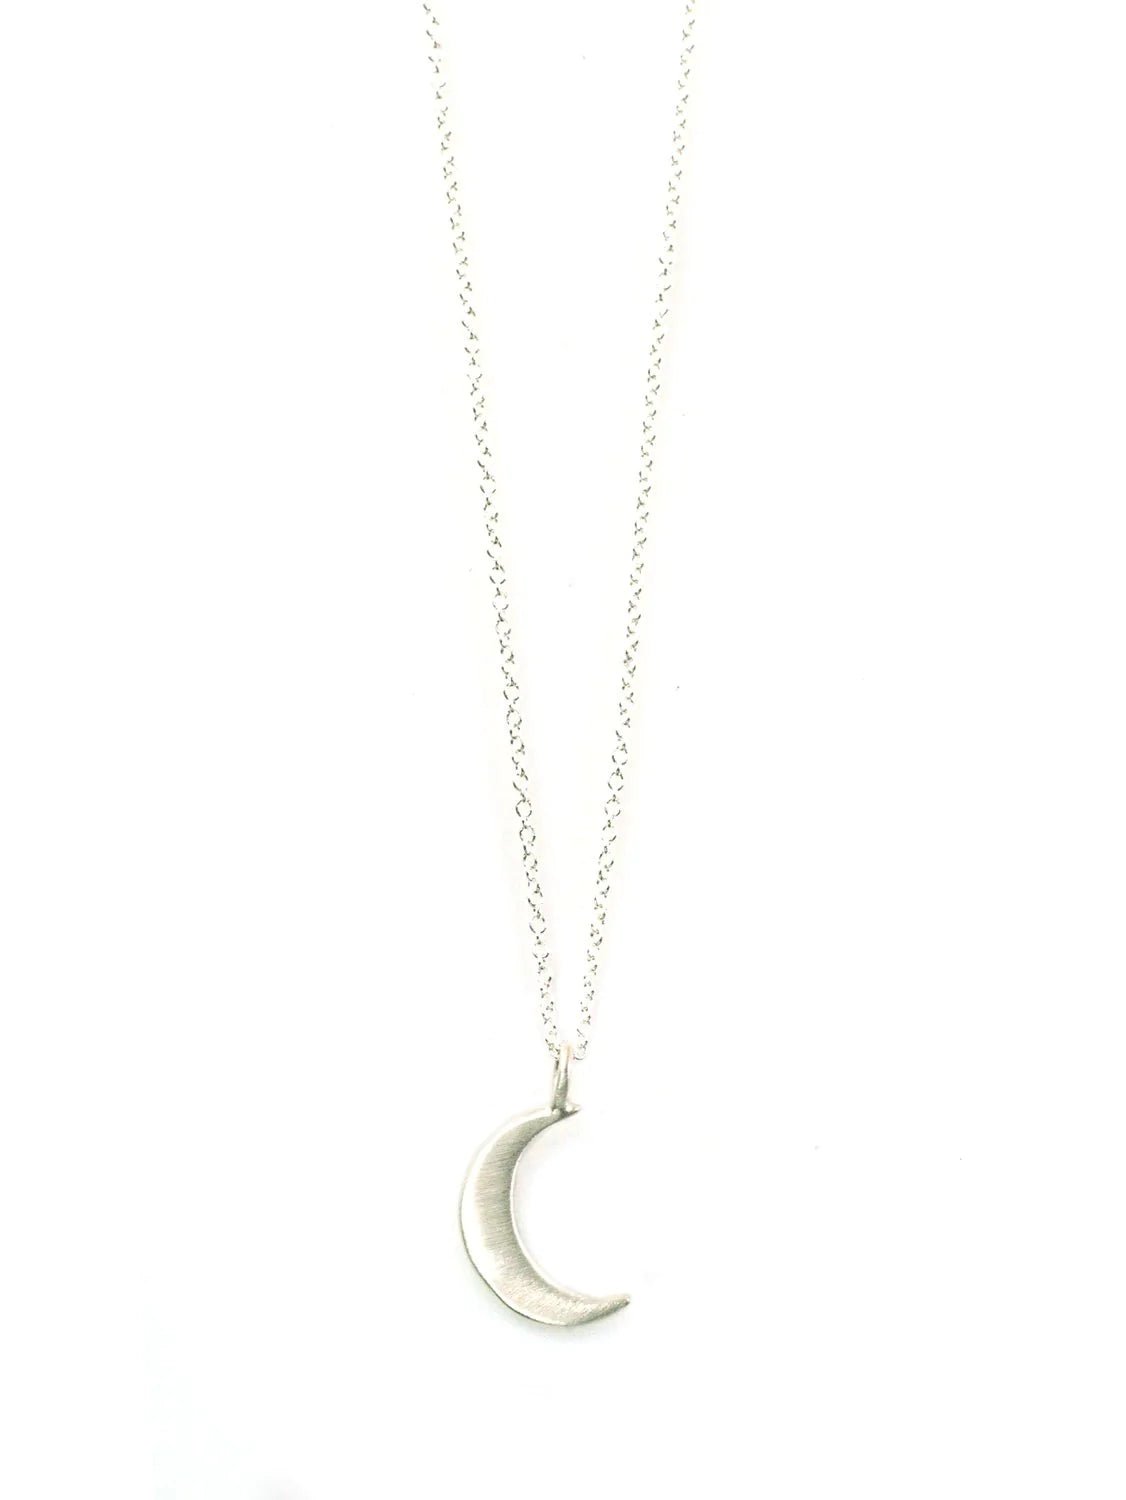 16" Moon Necklace - The Riviera Towel Company